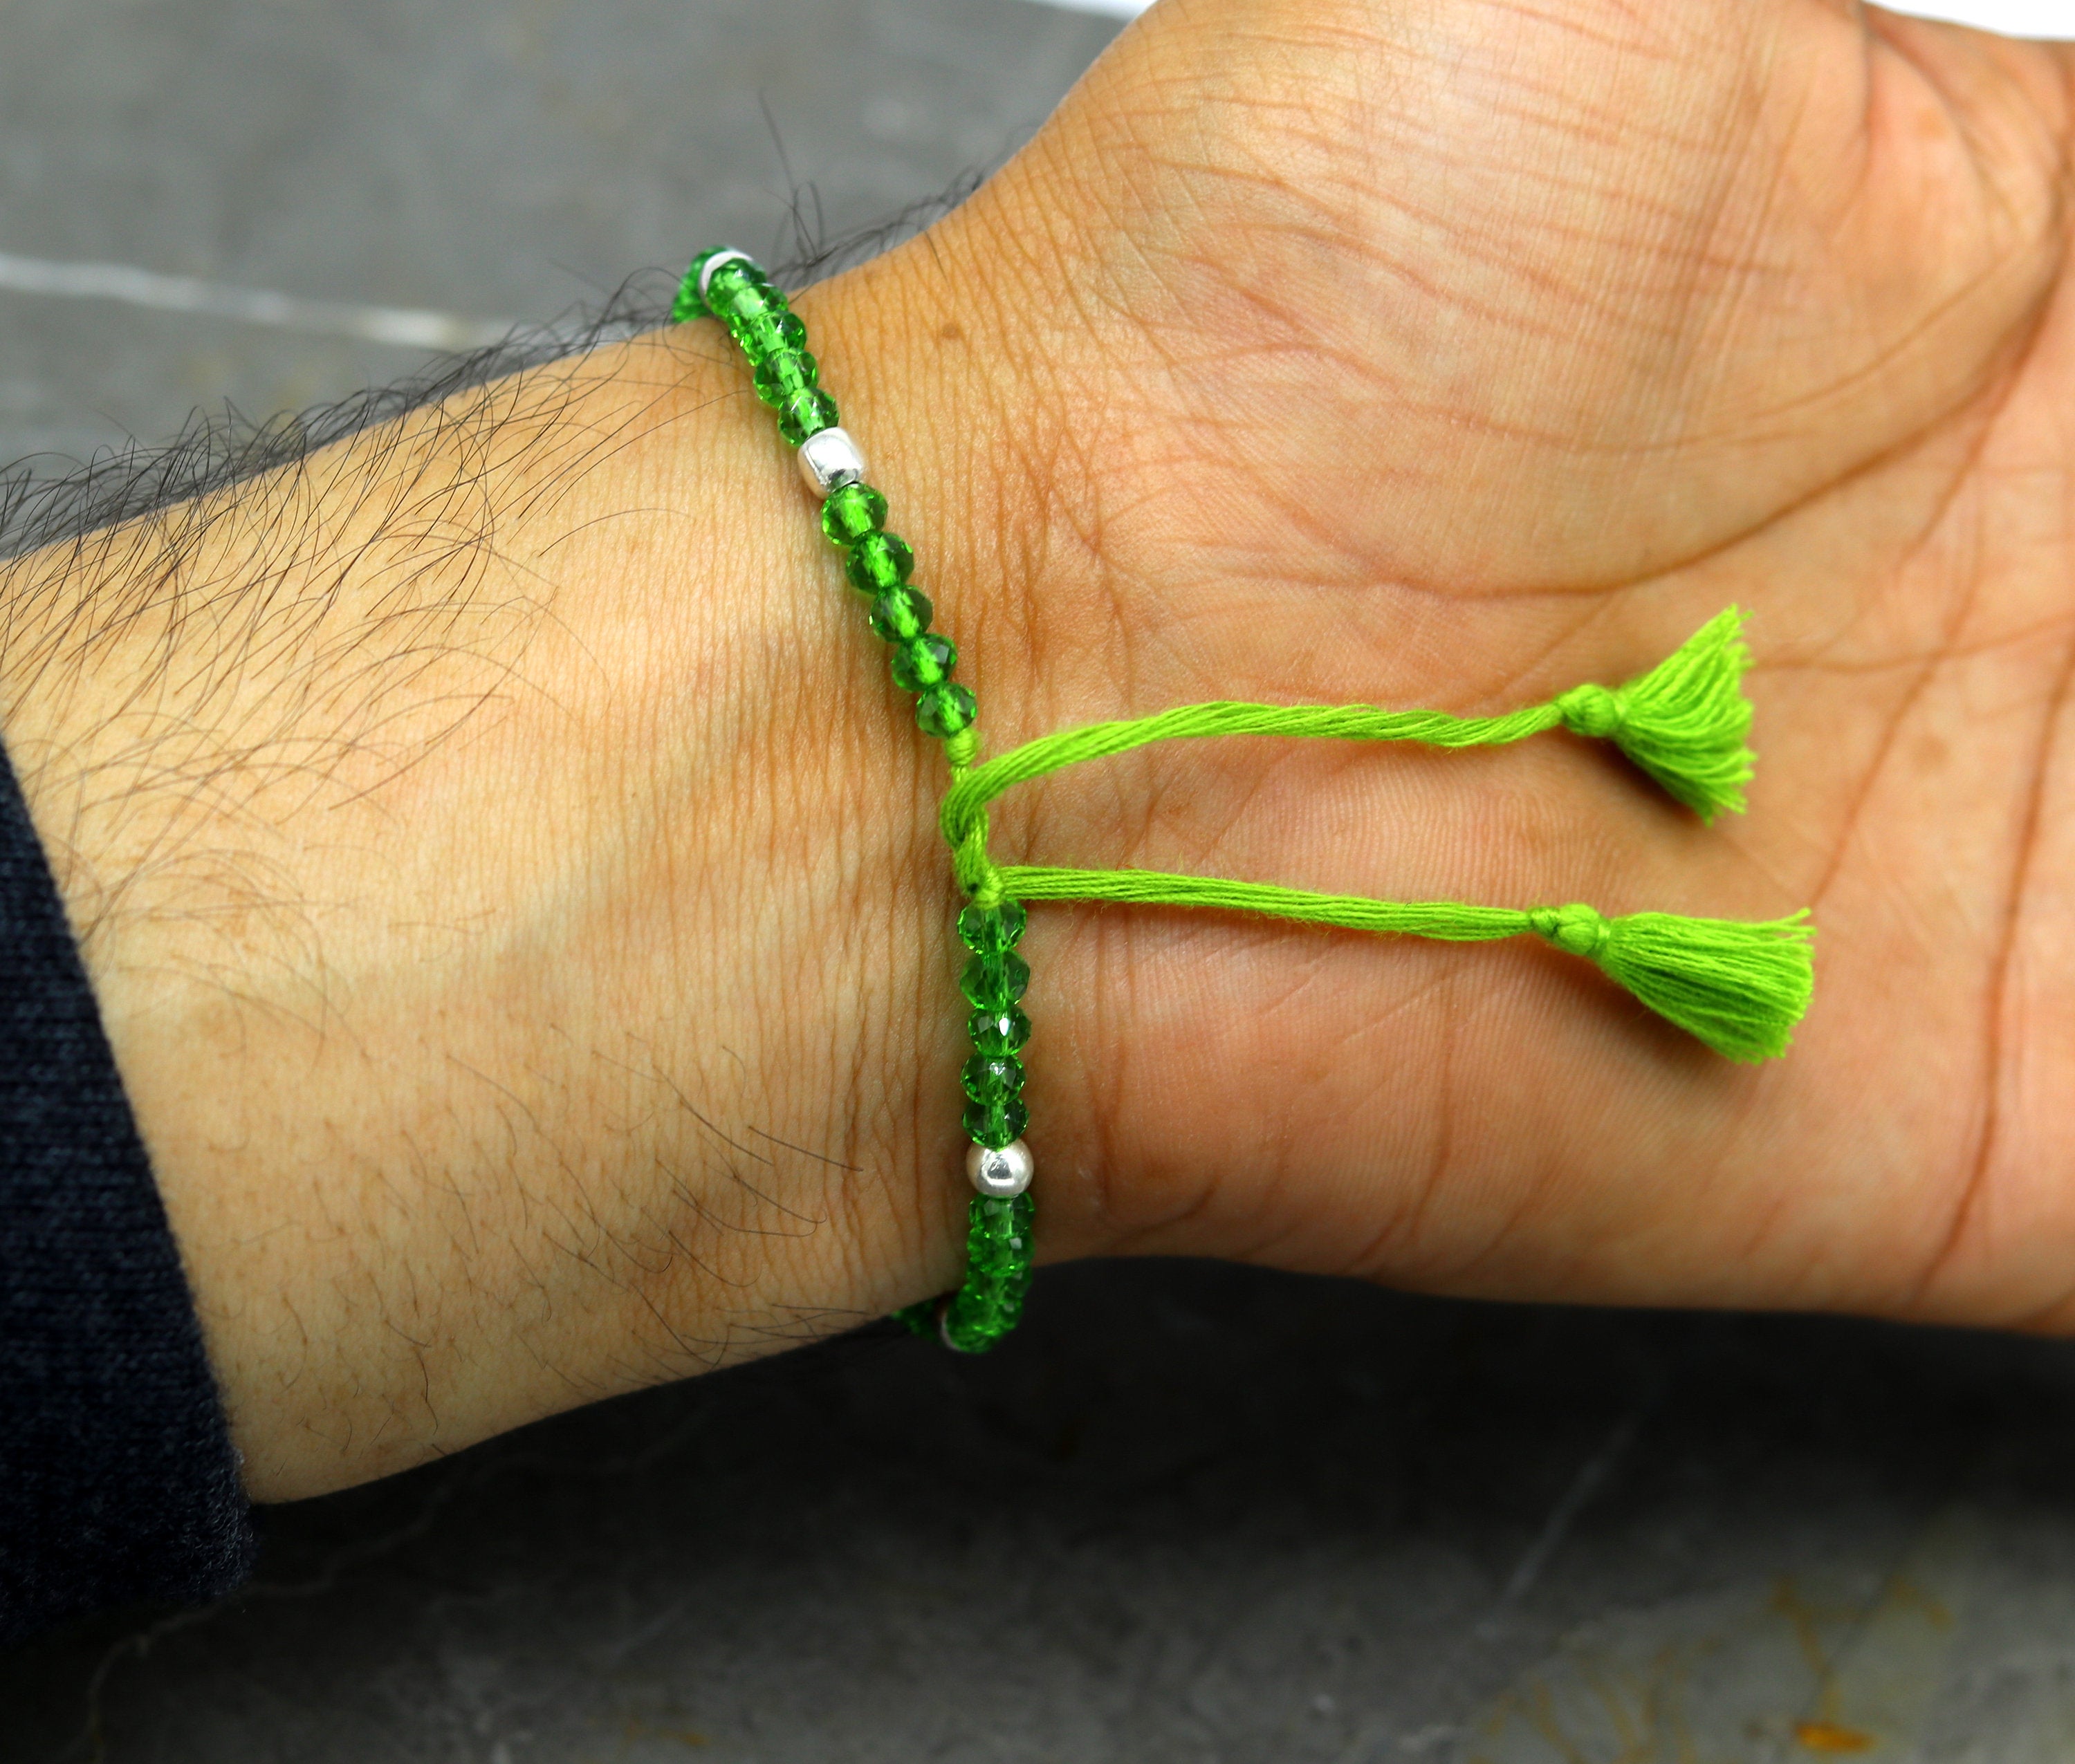 Premium Photo | Tied woven friendship bracelet made of thread on white